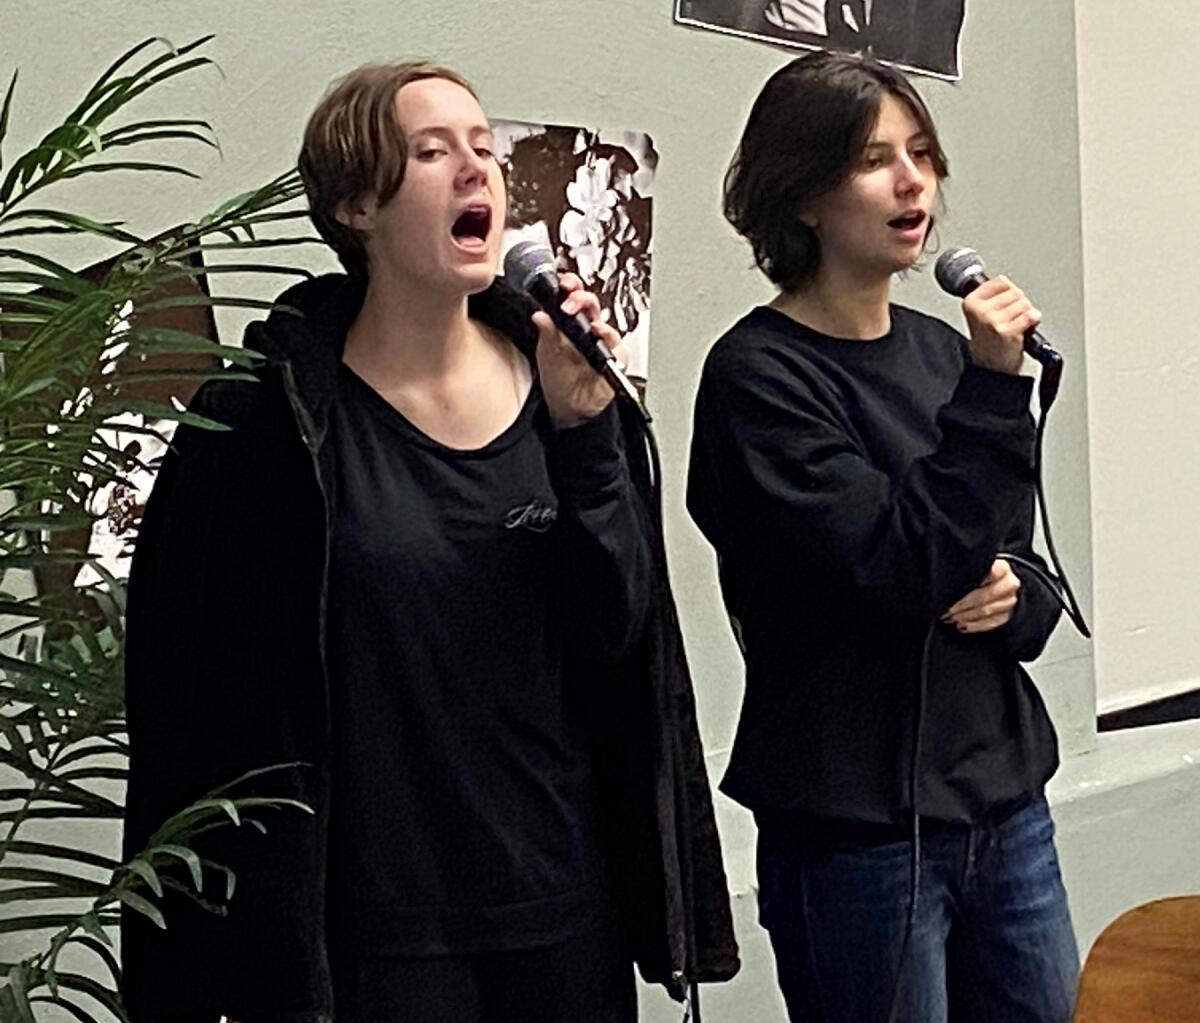 Senior vocalists Samantha Watts and Amaya Gray during a choir rehearsal.